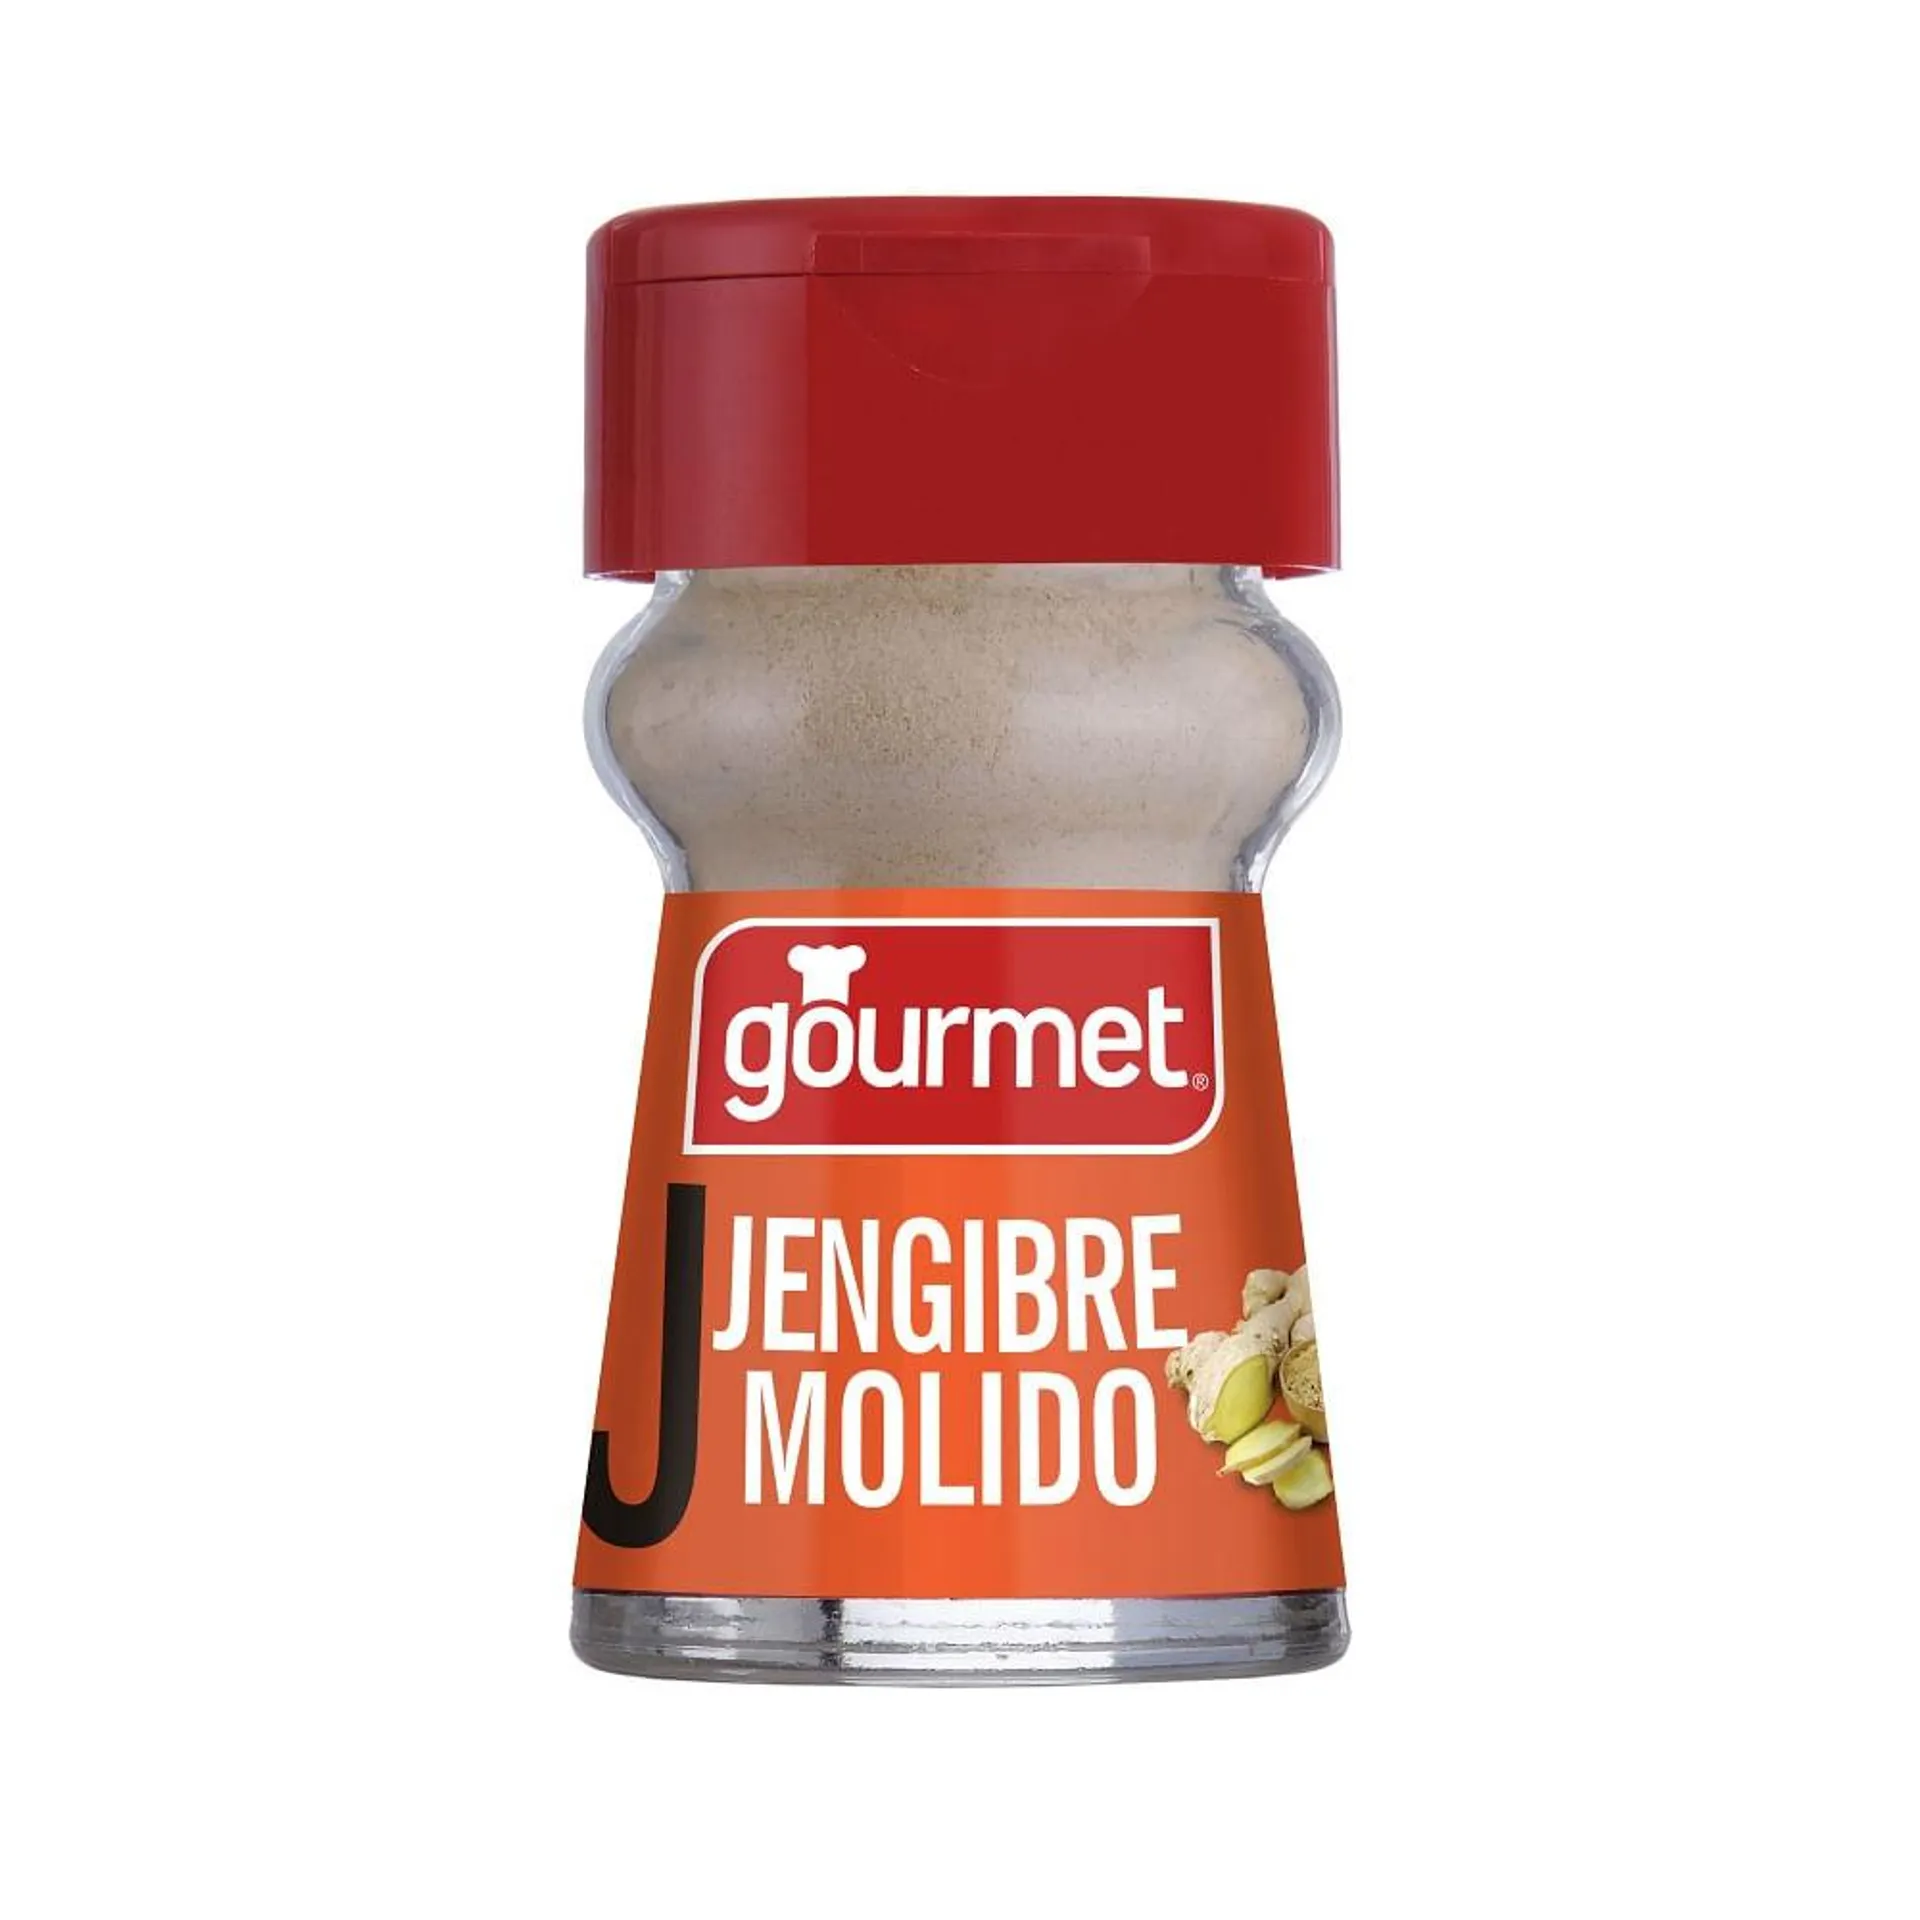 Jengibre molido Gourmet frasco 22 g